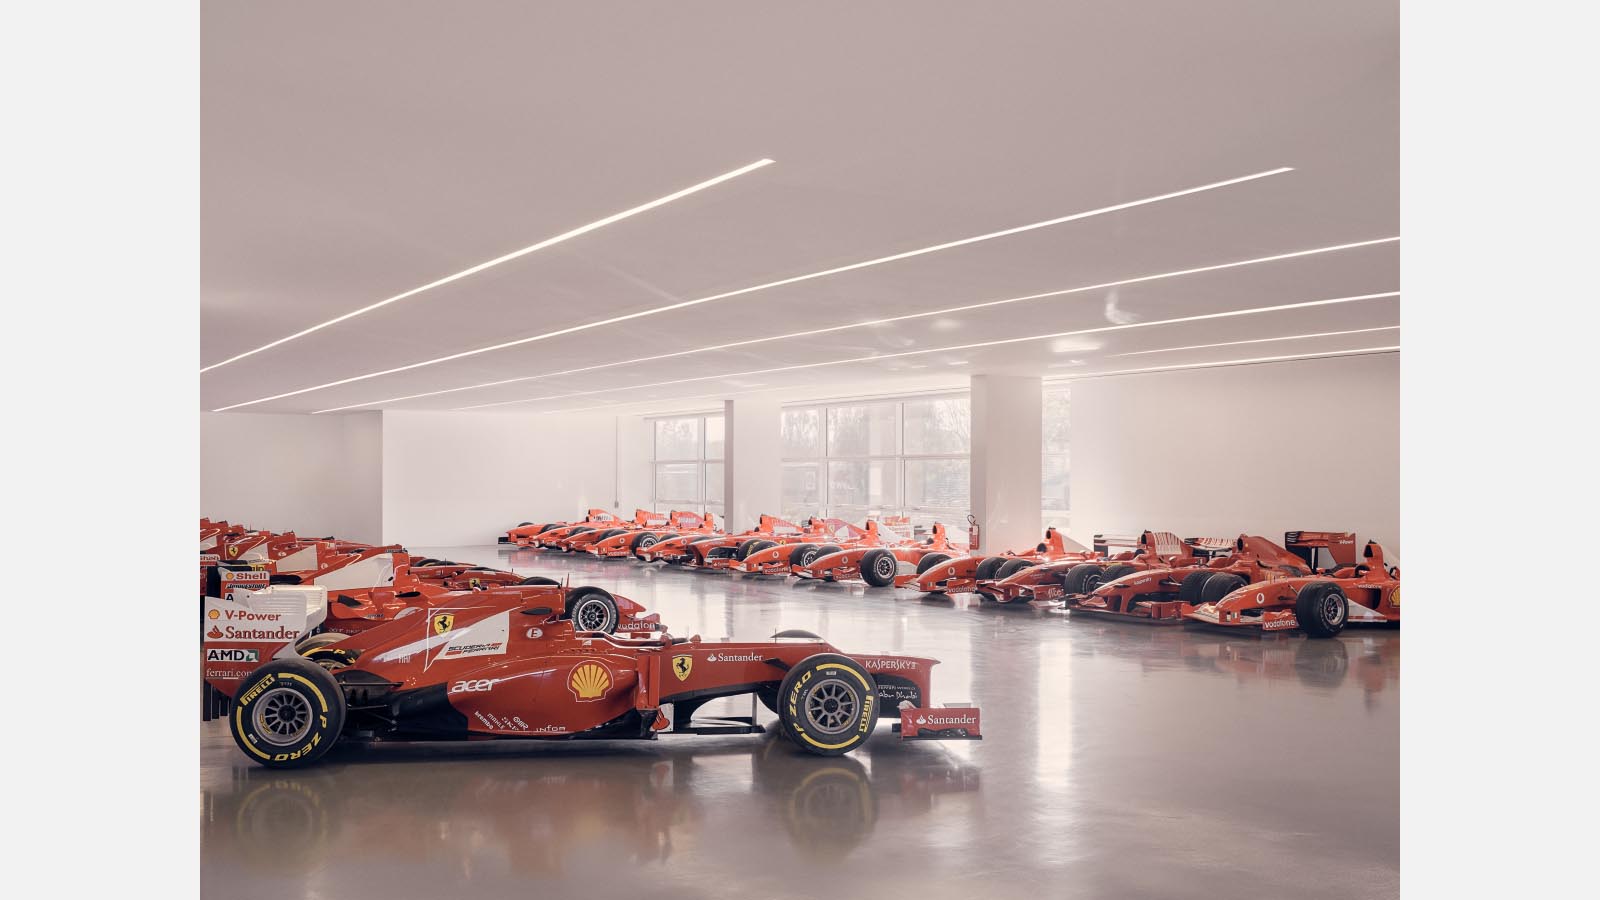 Corse Clienti Building photographed for Ferrari